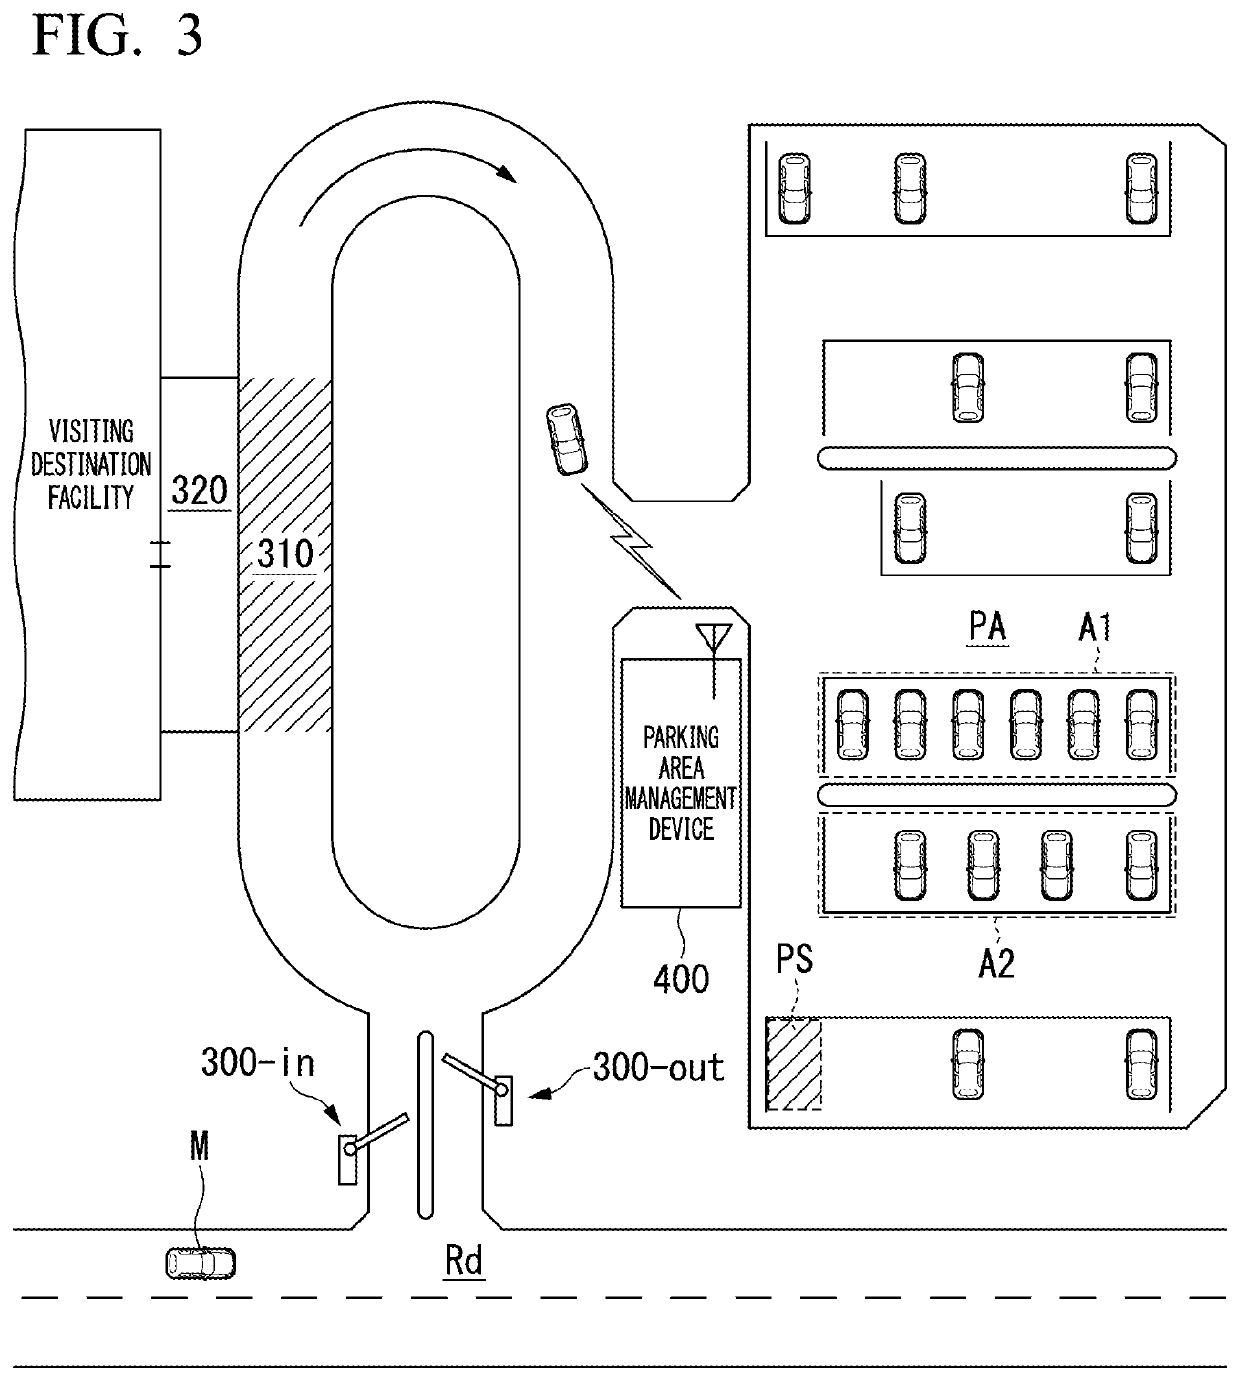 Parking area management device, parking area management method, and recording medium